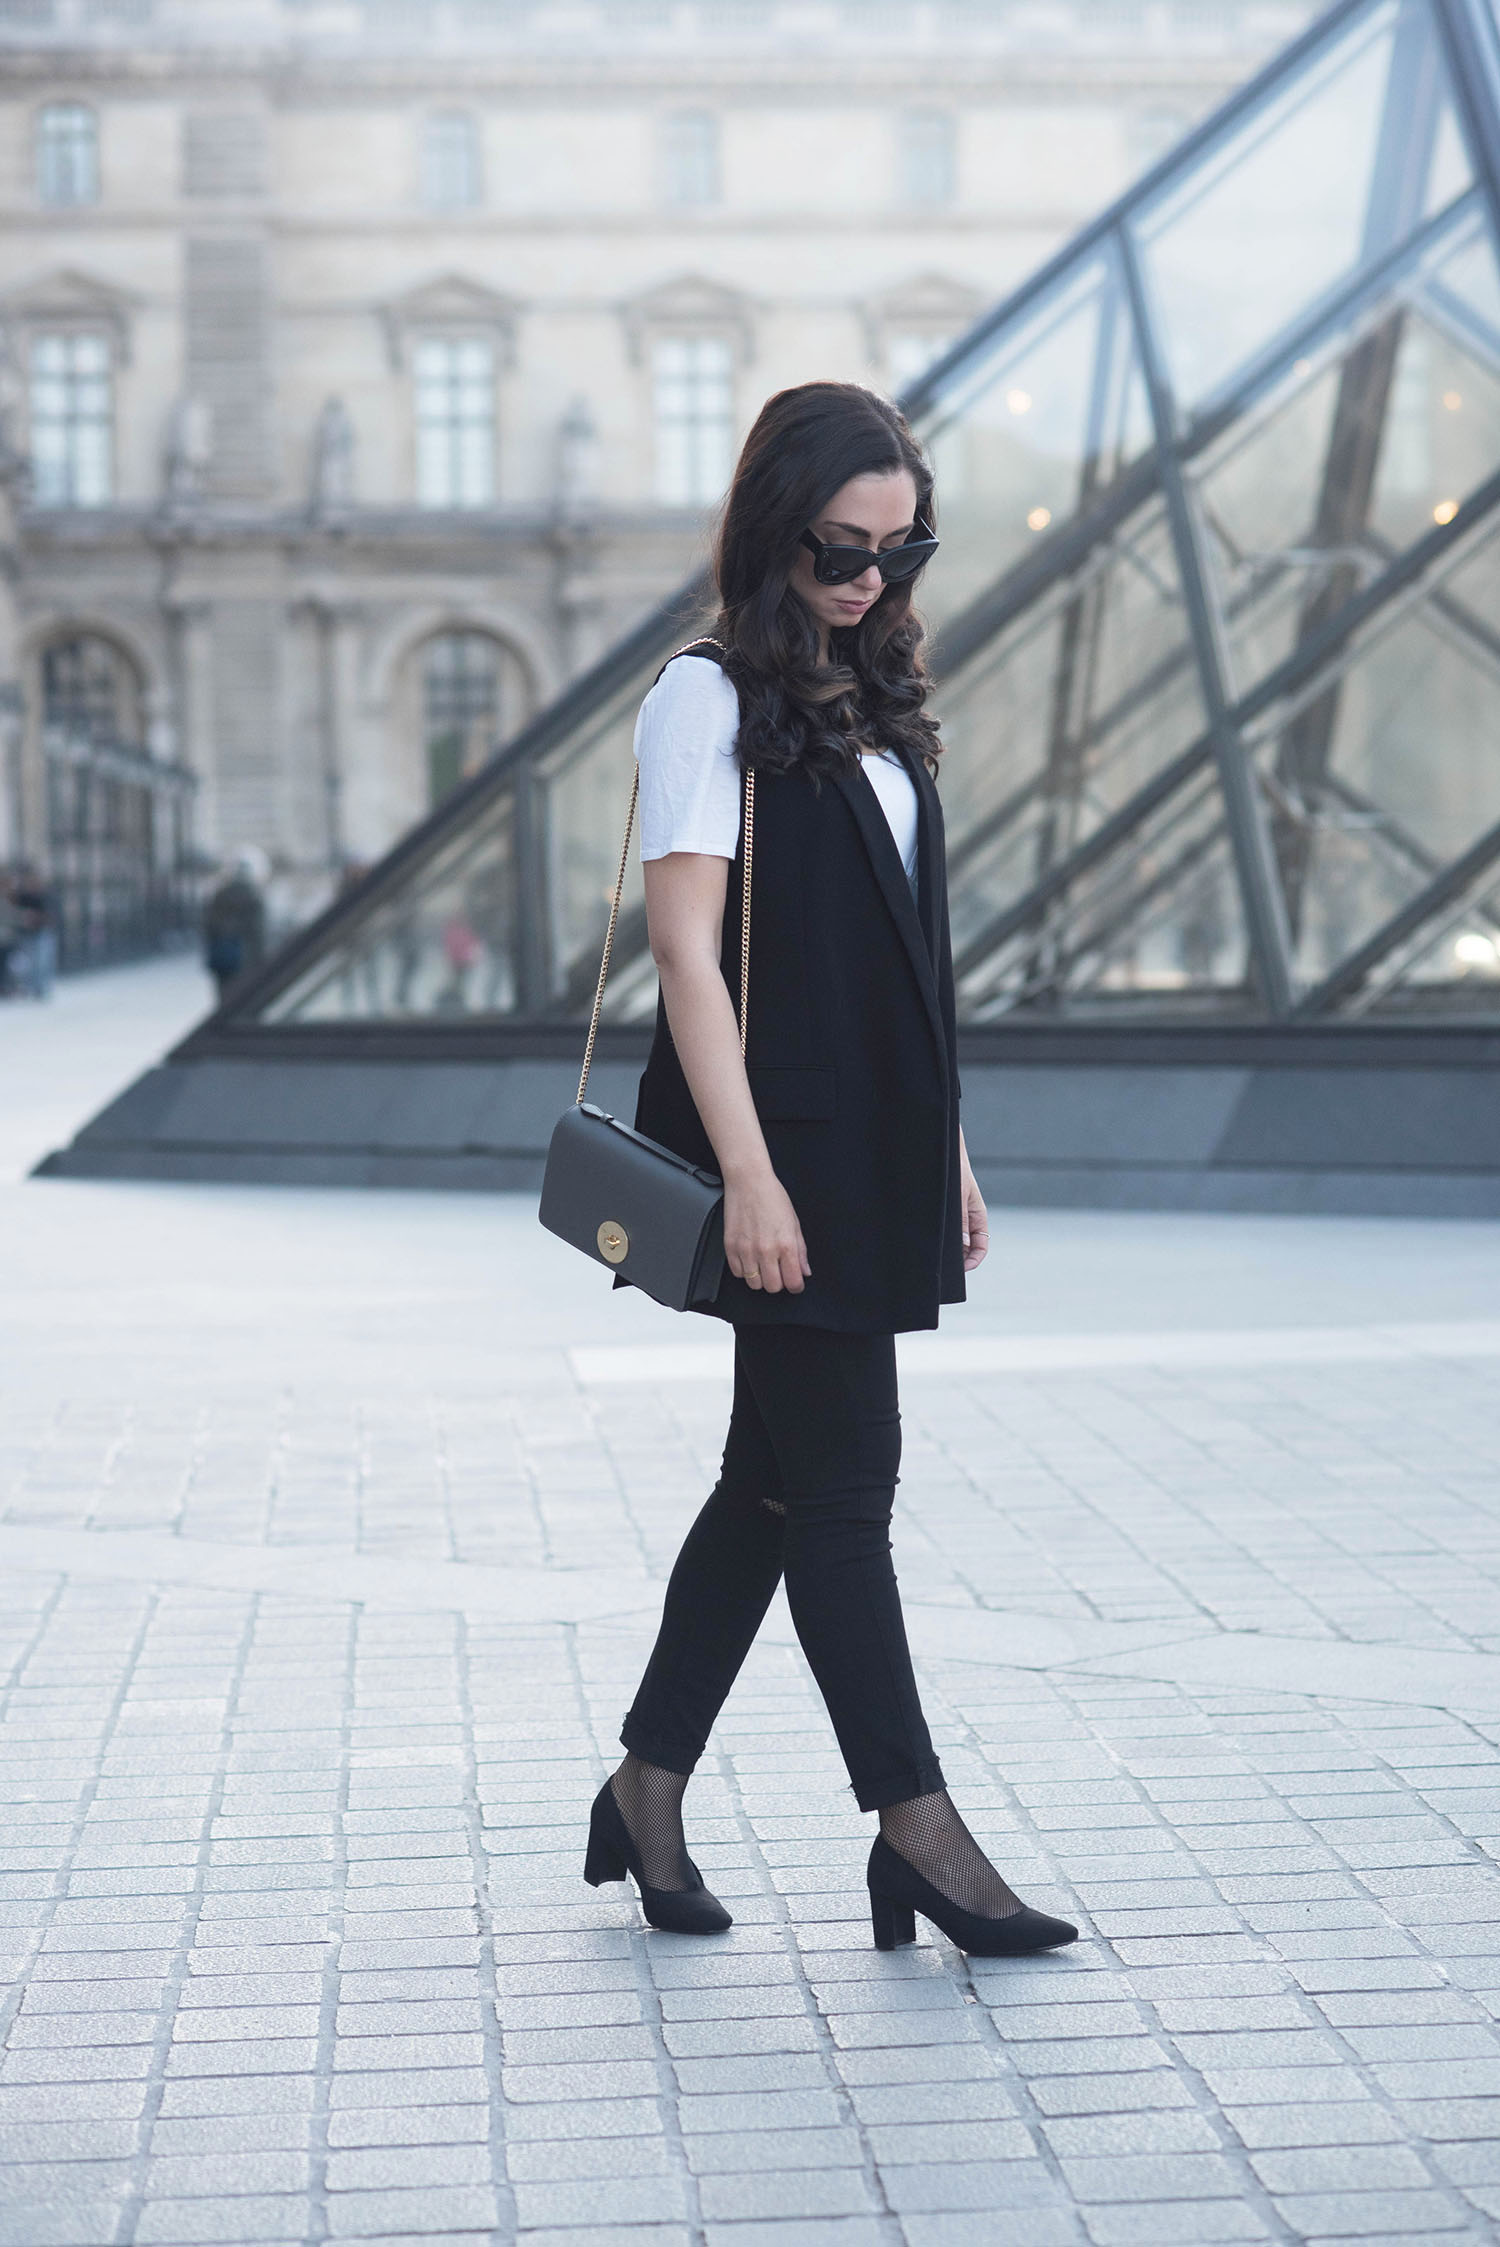 Fashion blogger Cee Fardoe of Coco & Vera walks at the Louvre museum wearing a black Zara waistcoat and carrying a grey Camelia Roma crossbody bag